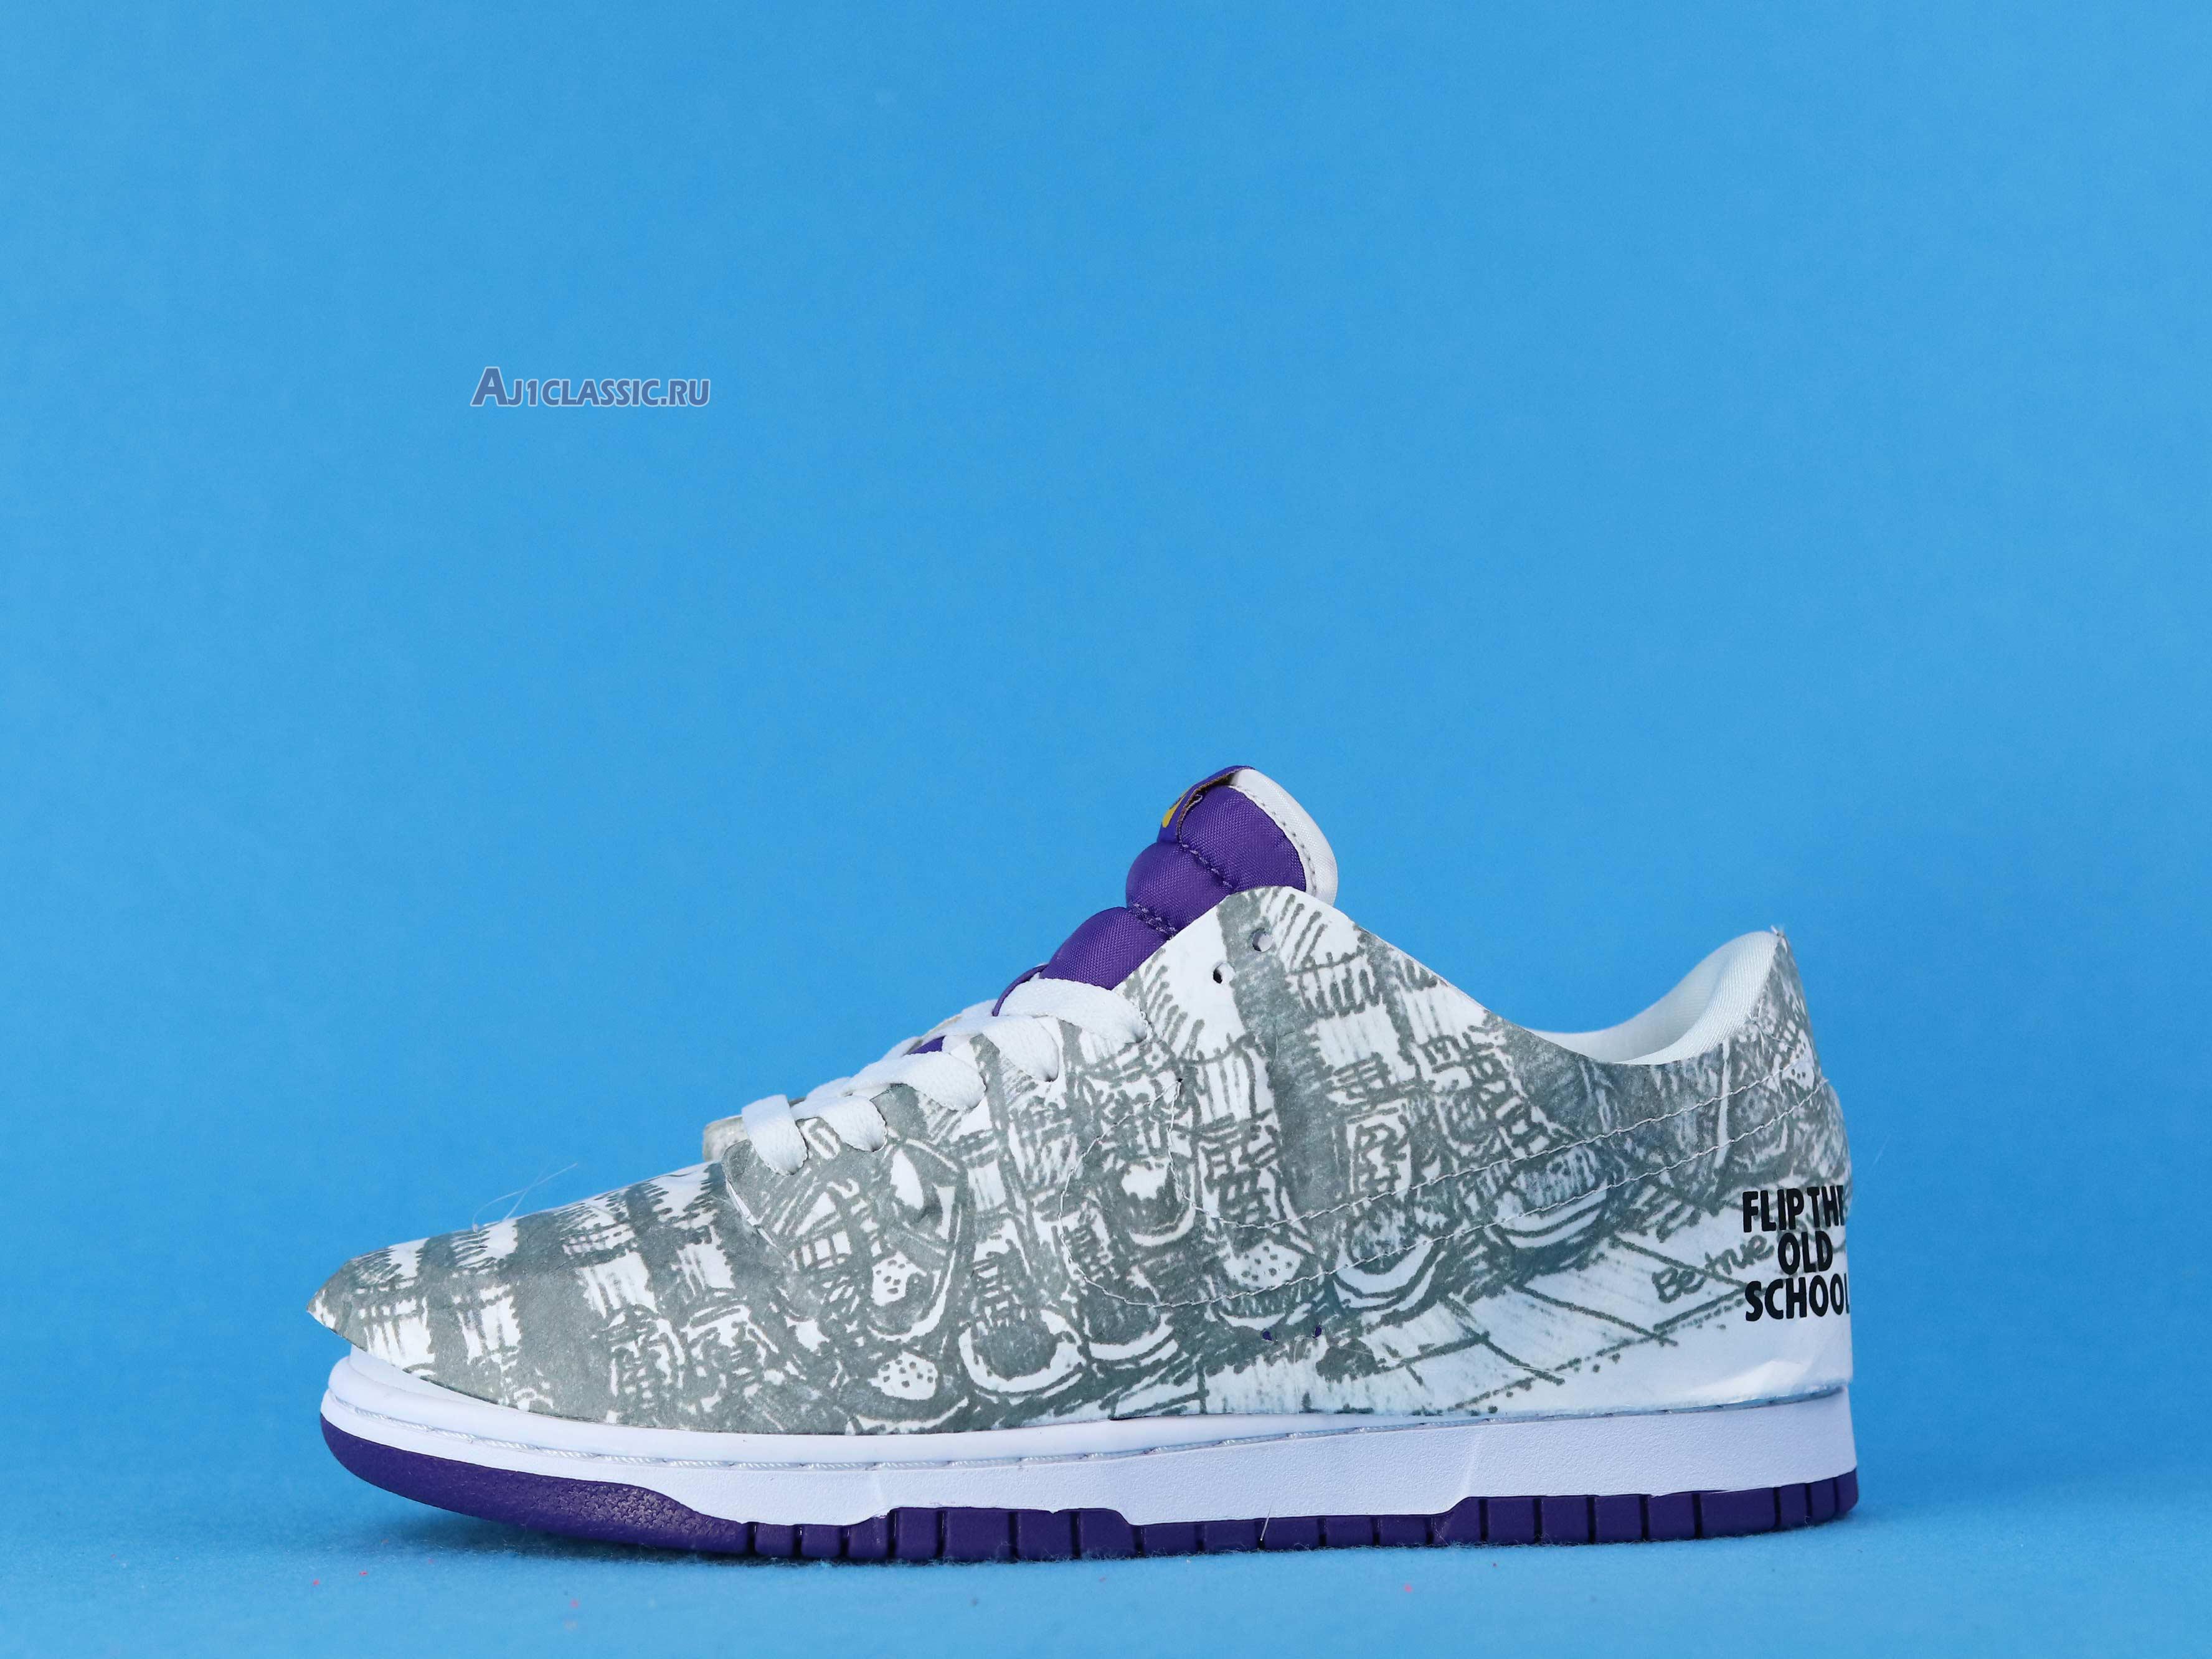 Nike Dunk Low Flip The Old School DJ4636-100 White/Varsity Purple/Varsity Maize/Black Sneakers